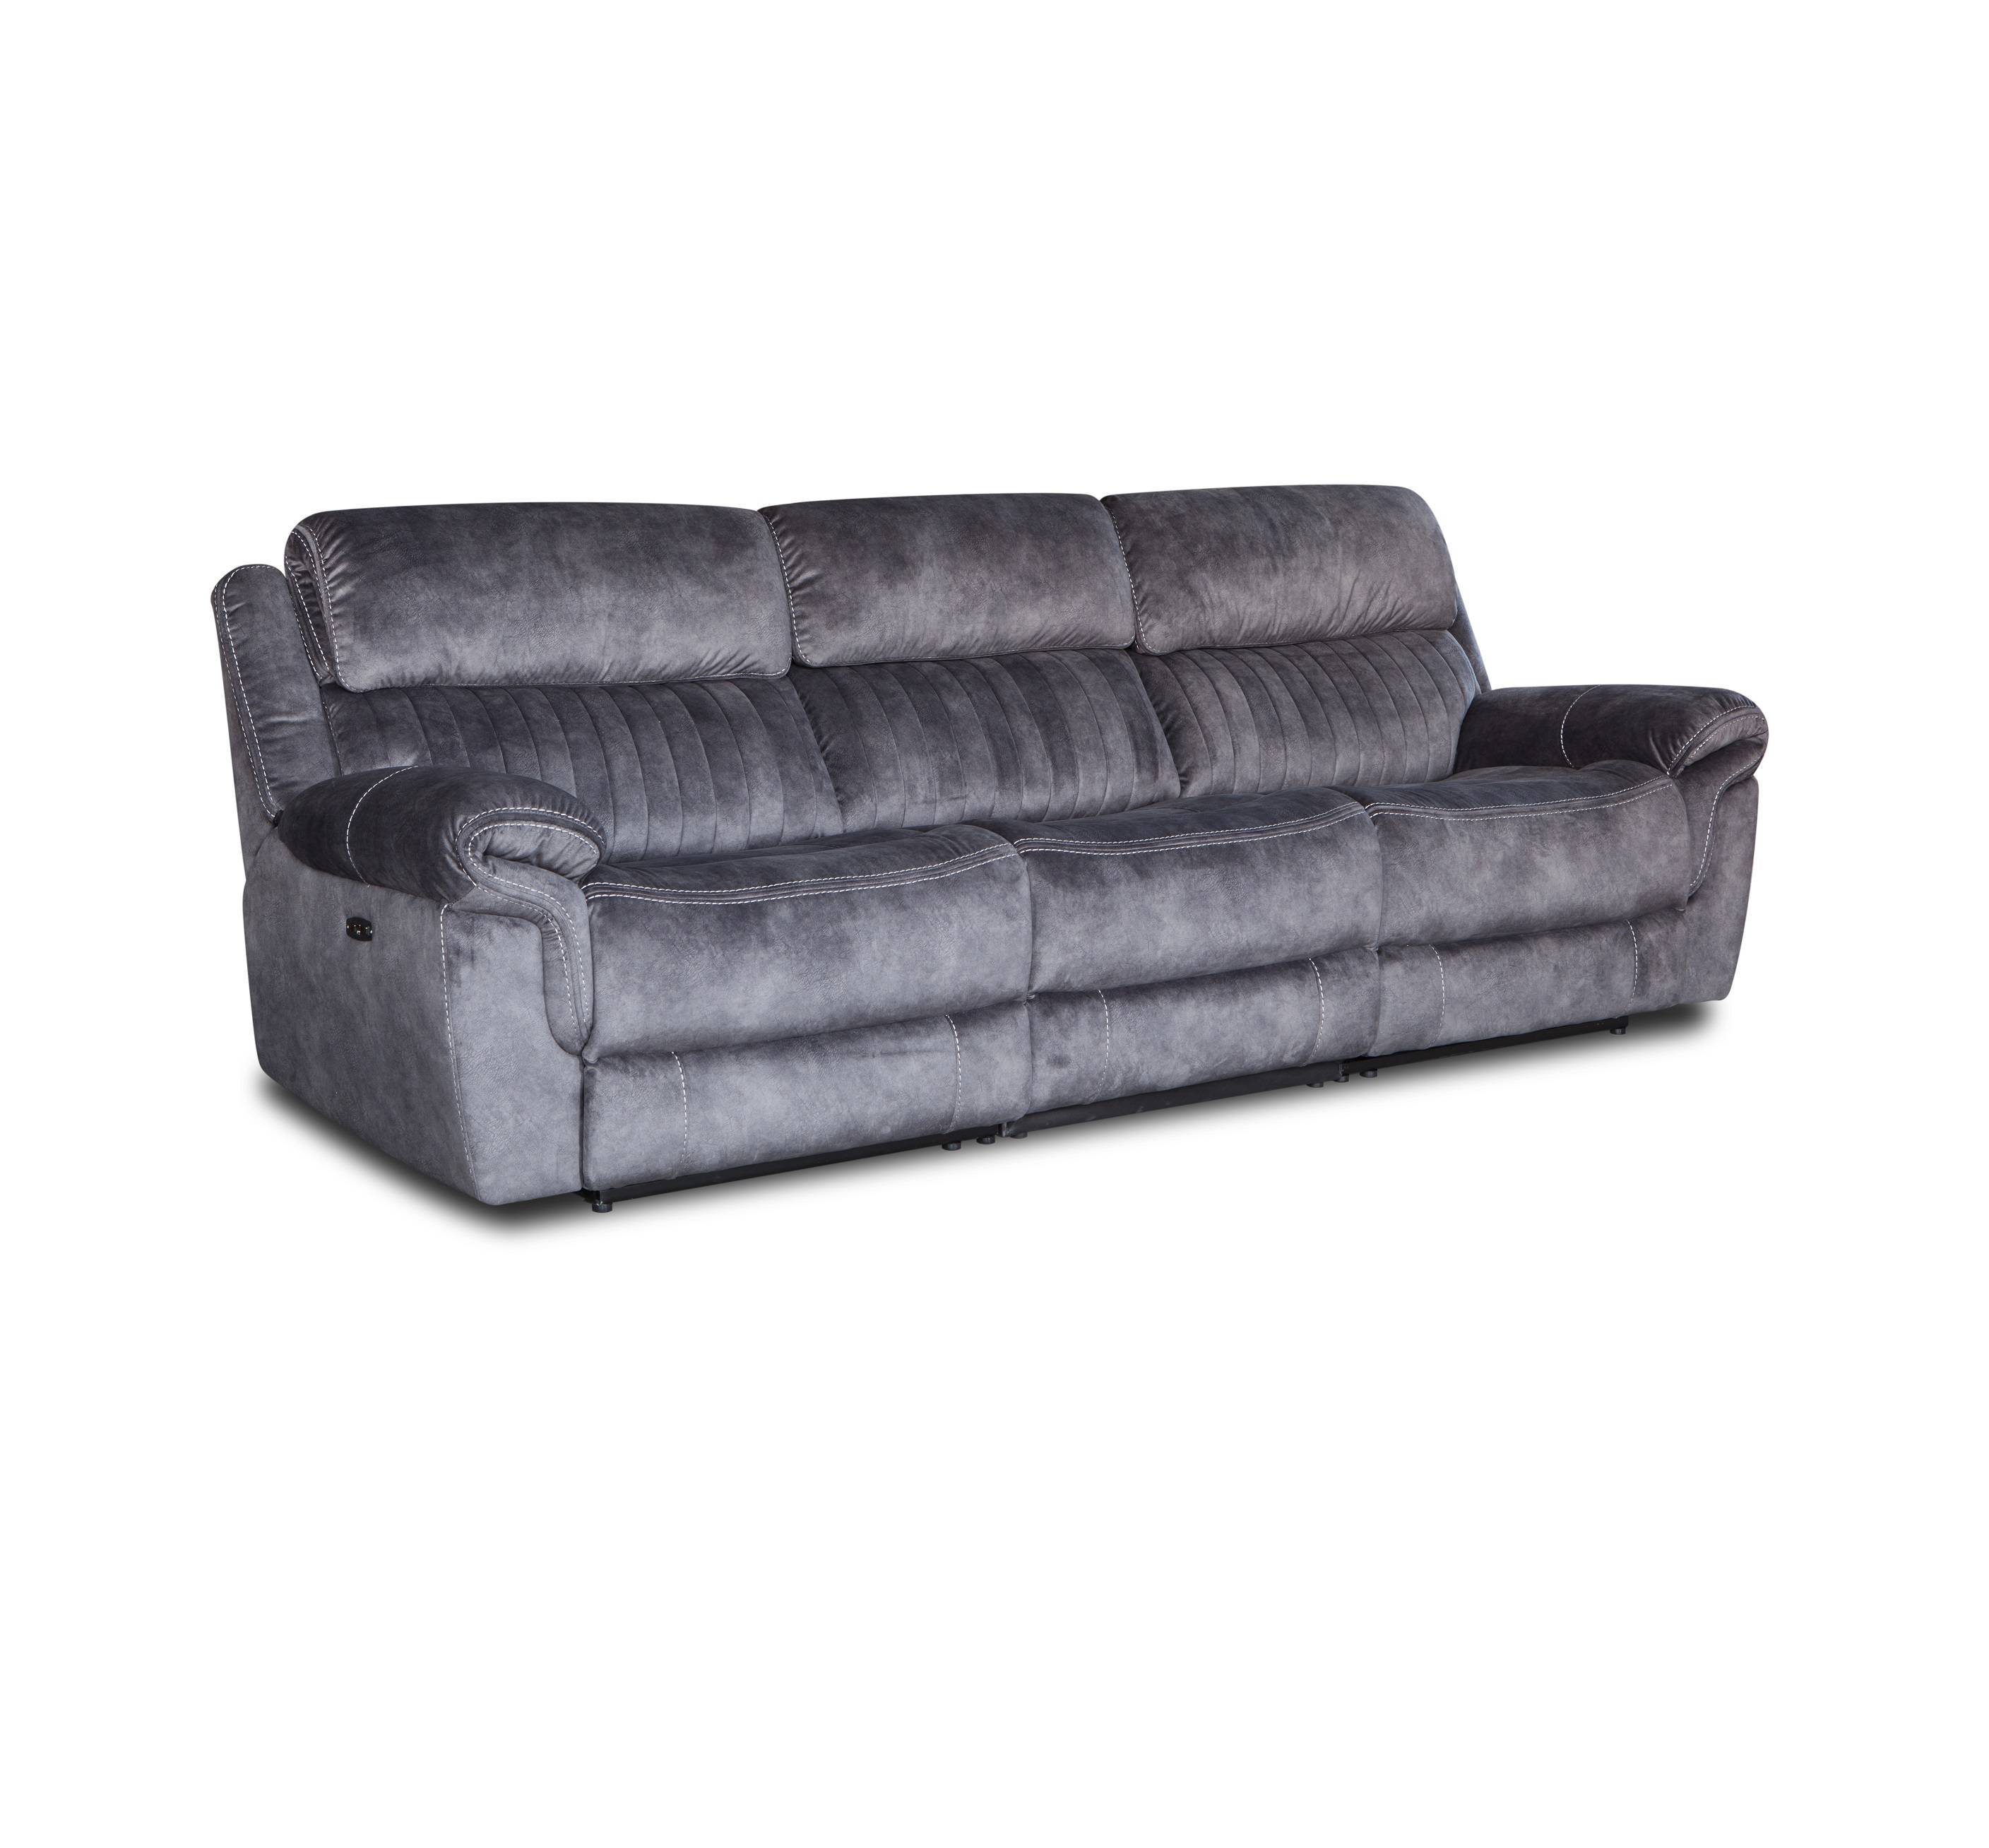 American modern design 3 seat soft recliner fabric sofa